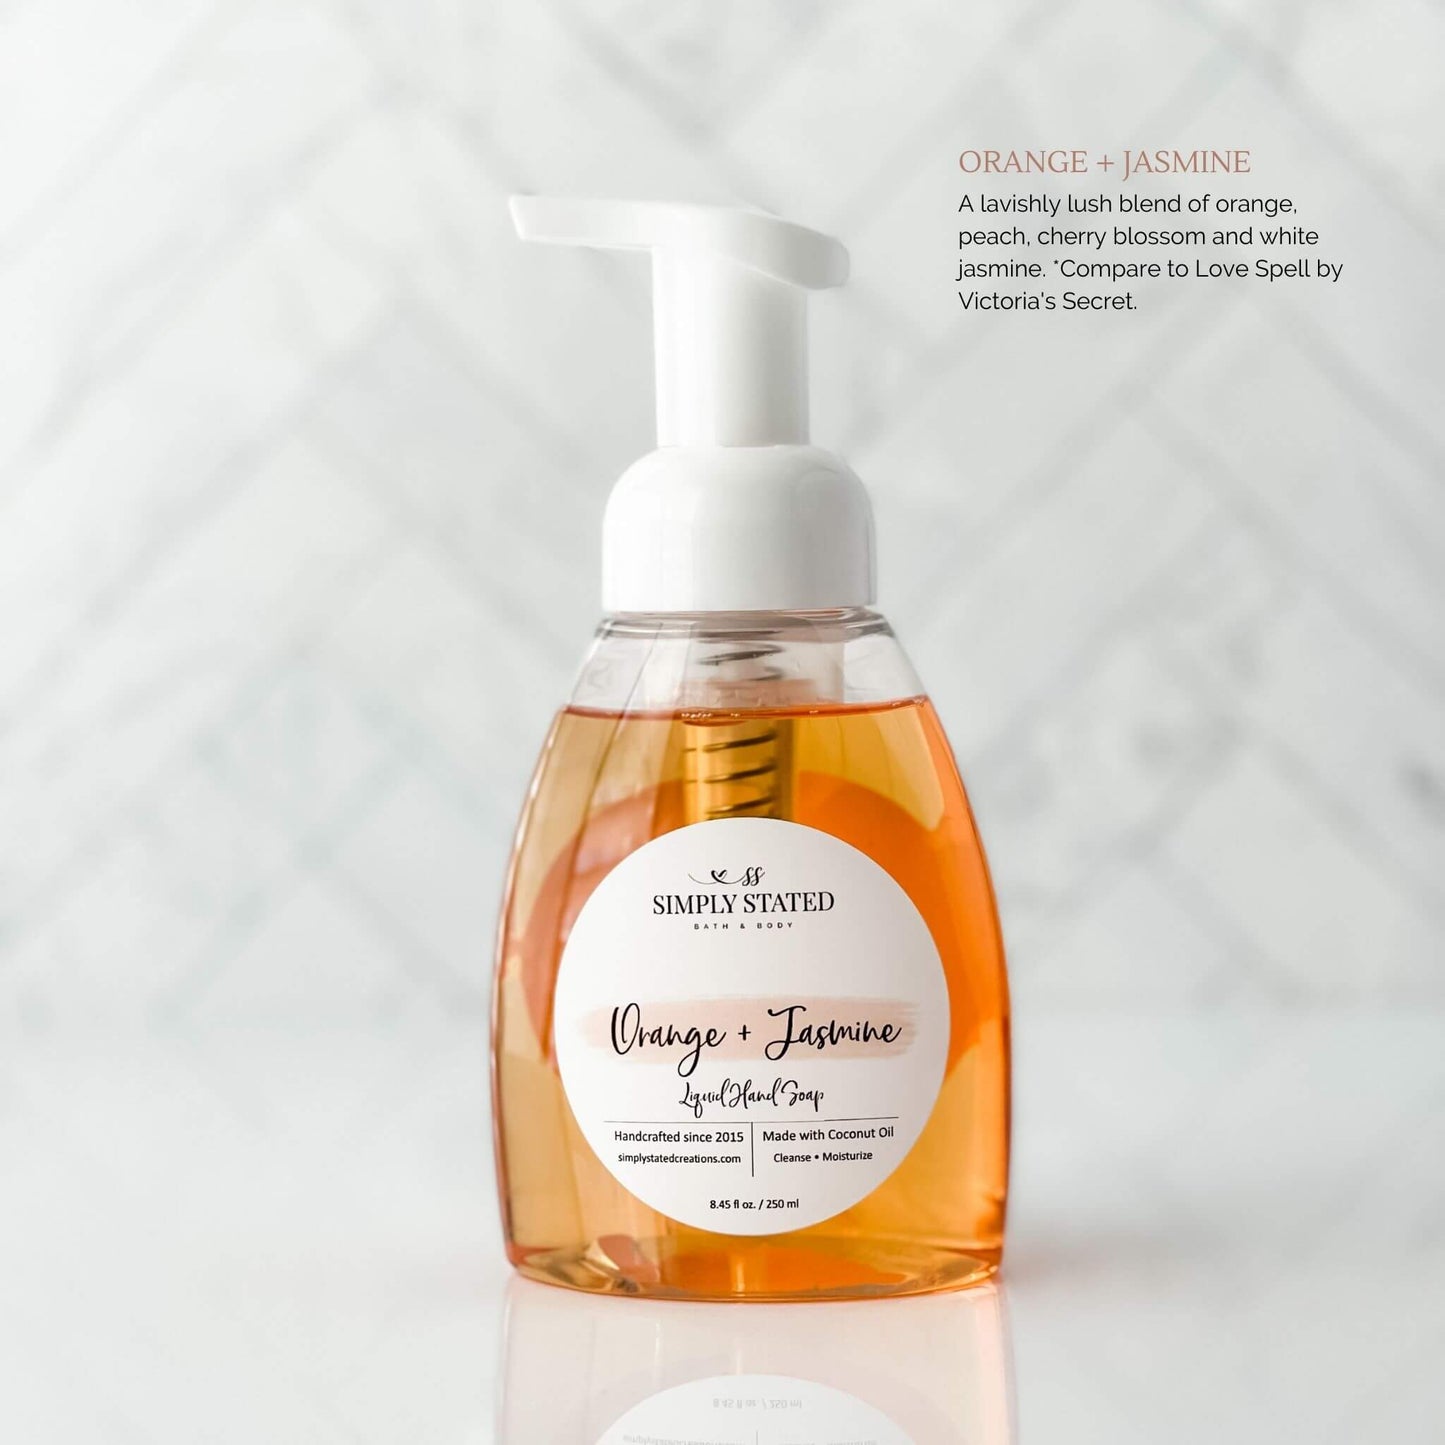 Nourishing Spring Foaming Hand Soap in Orange + Jasmine. A lavishly lush blend of orange, peach, cherry blossom and white jasmine. *Compare to Love Spell by VS.